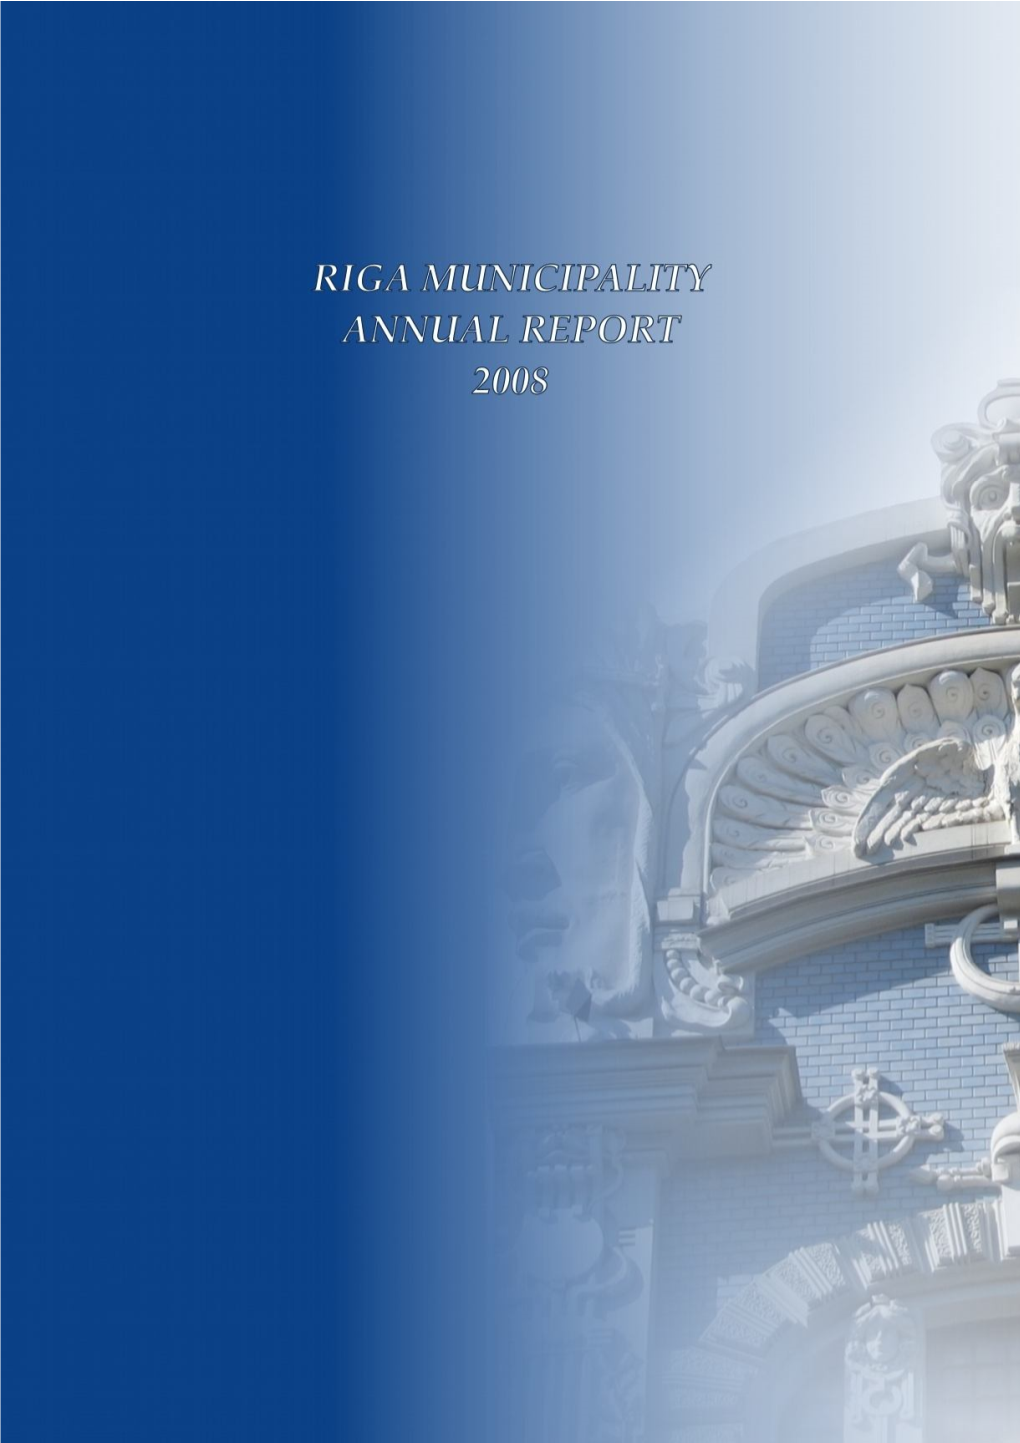 Riga Municipality Annual Report 2008“ As of 26.05.2009